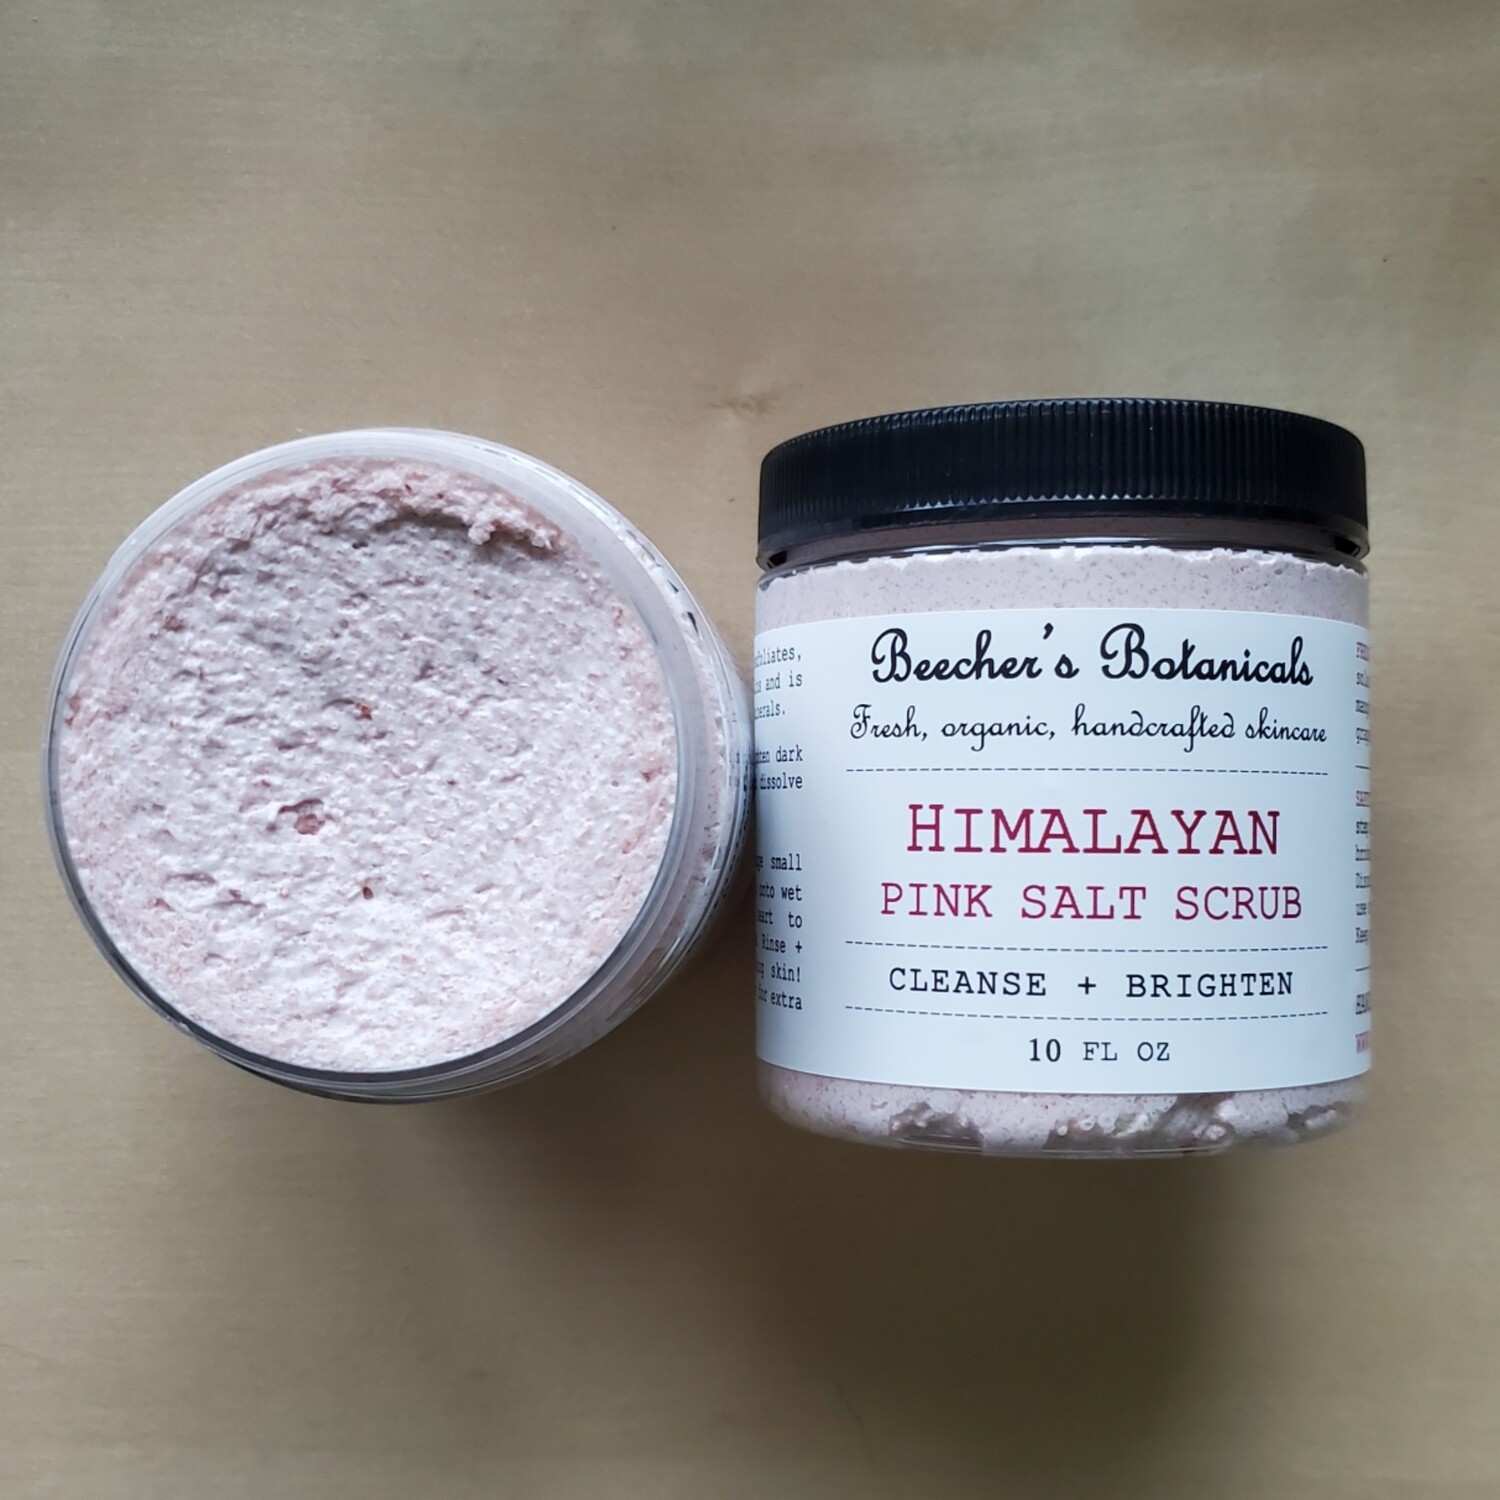 HIMALAYAN PINK SALT SCRUB | Cleanse + Brighten